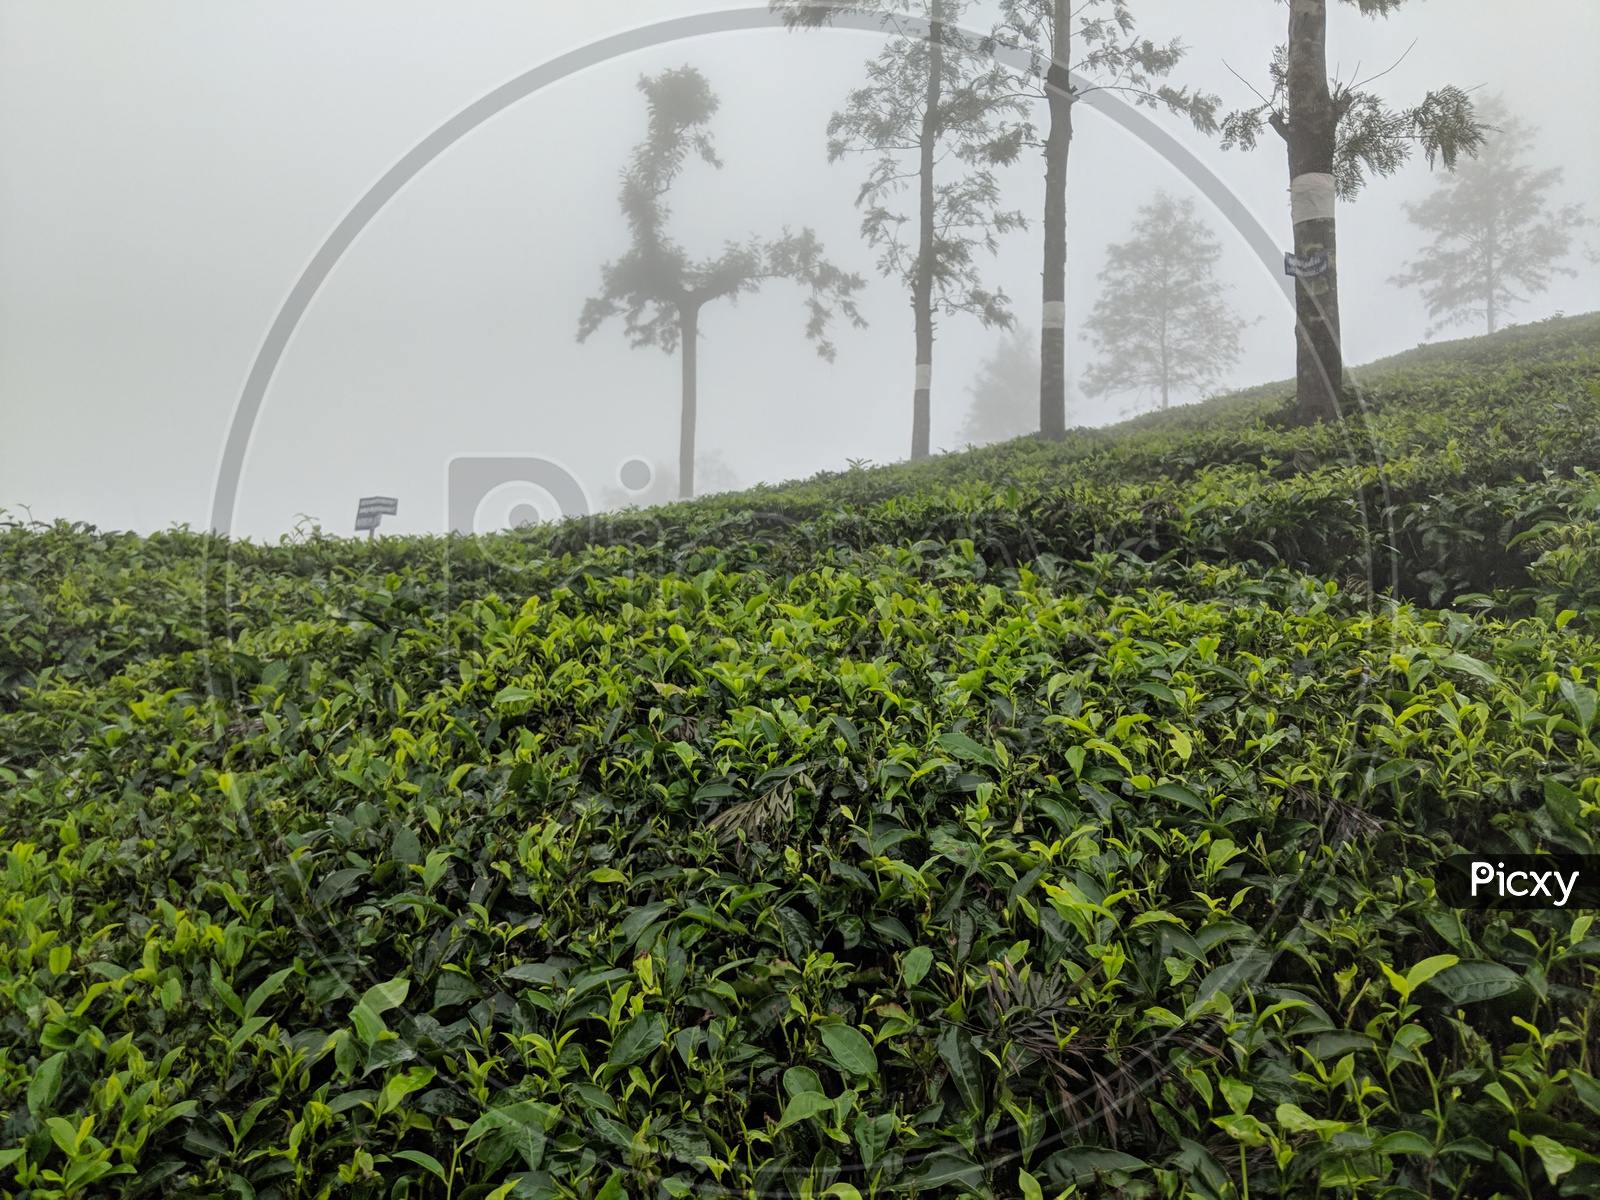 Valaparai Tea Plantations